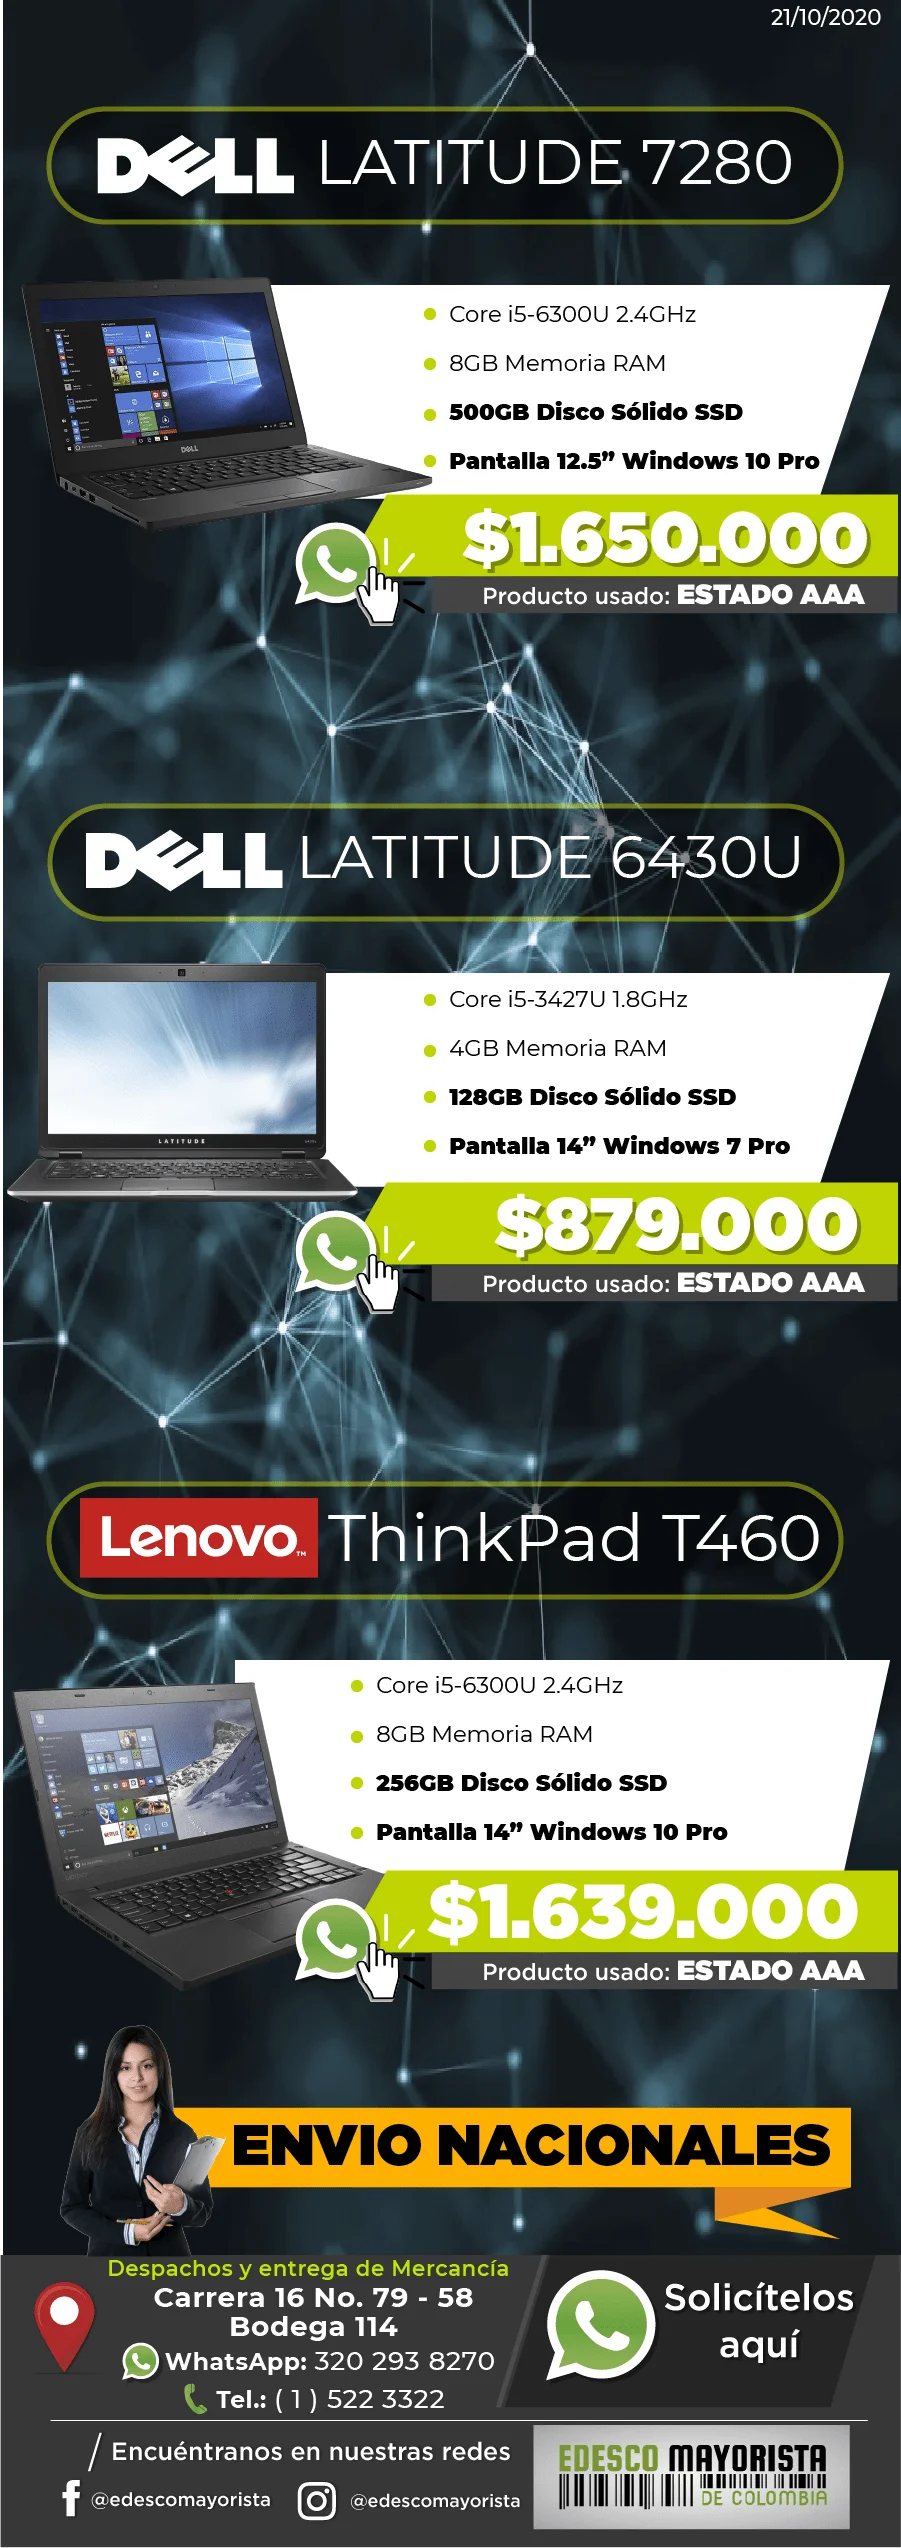 Portátil Lenovo T460 256GB SSD